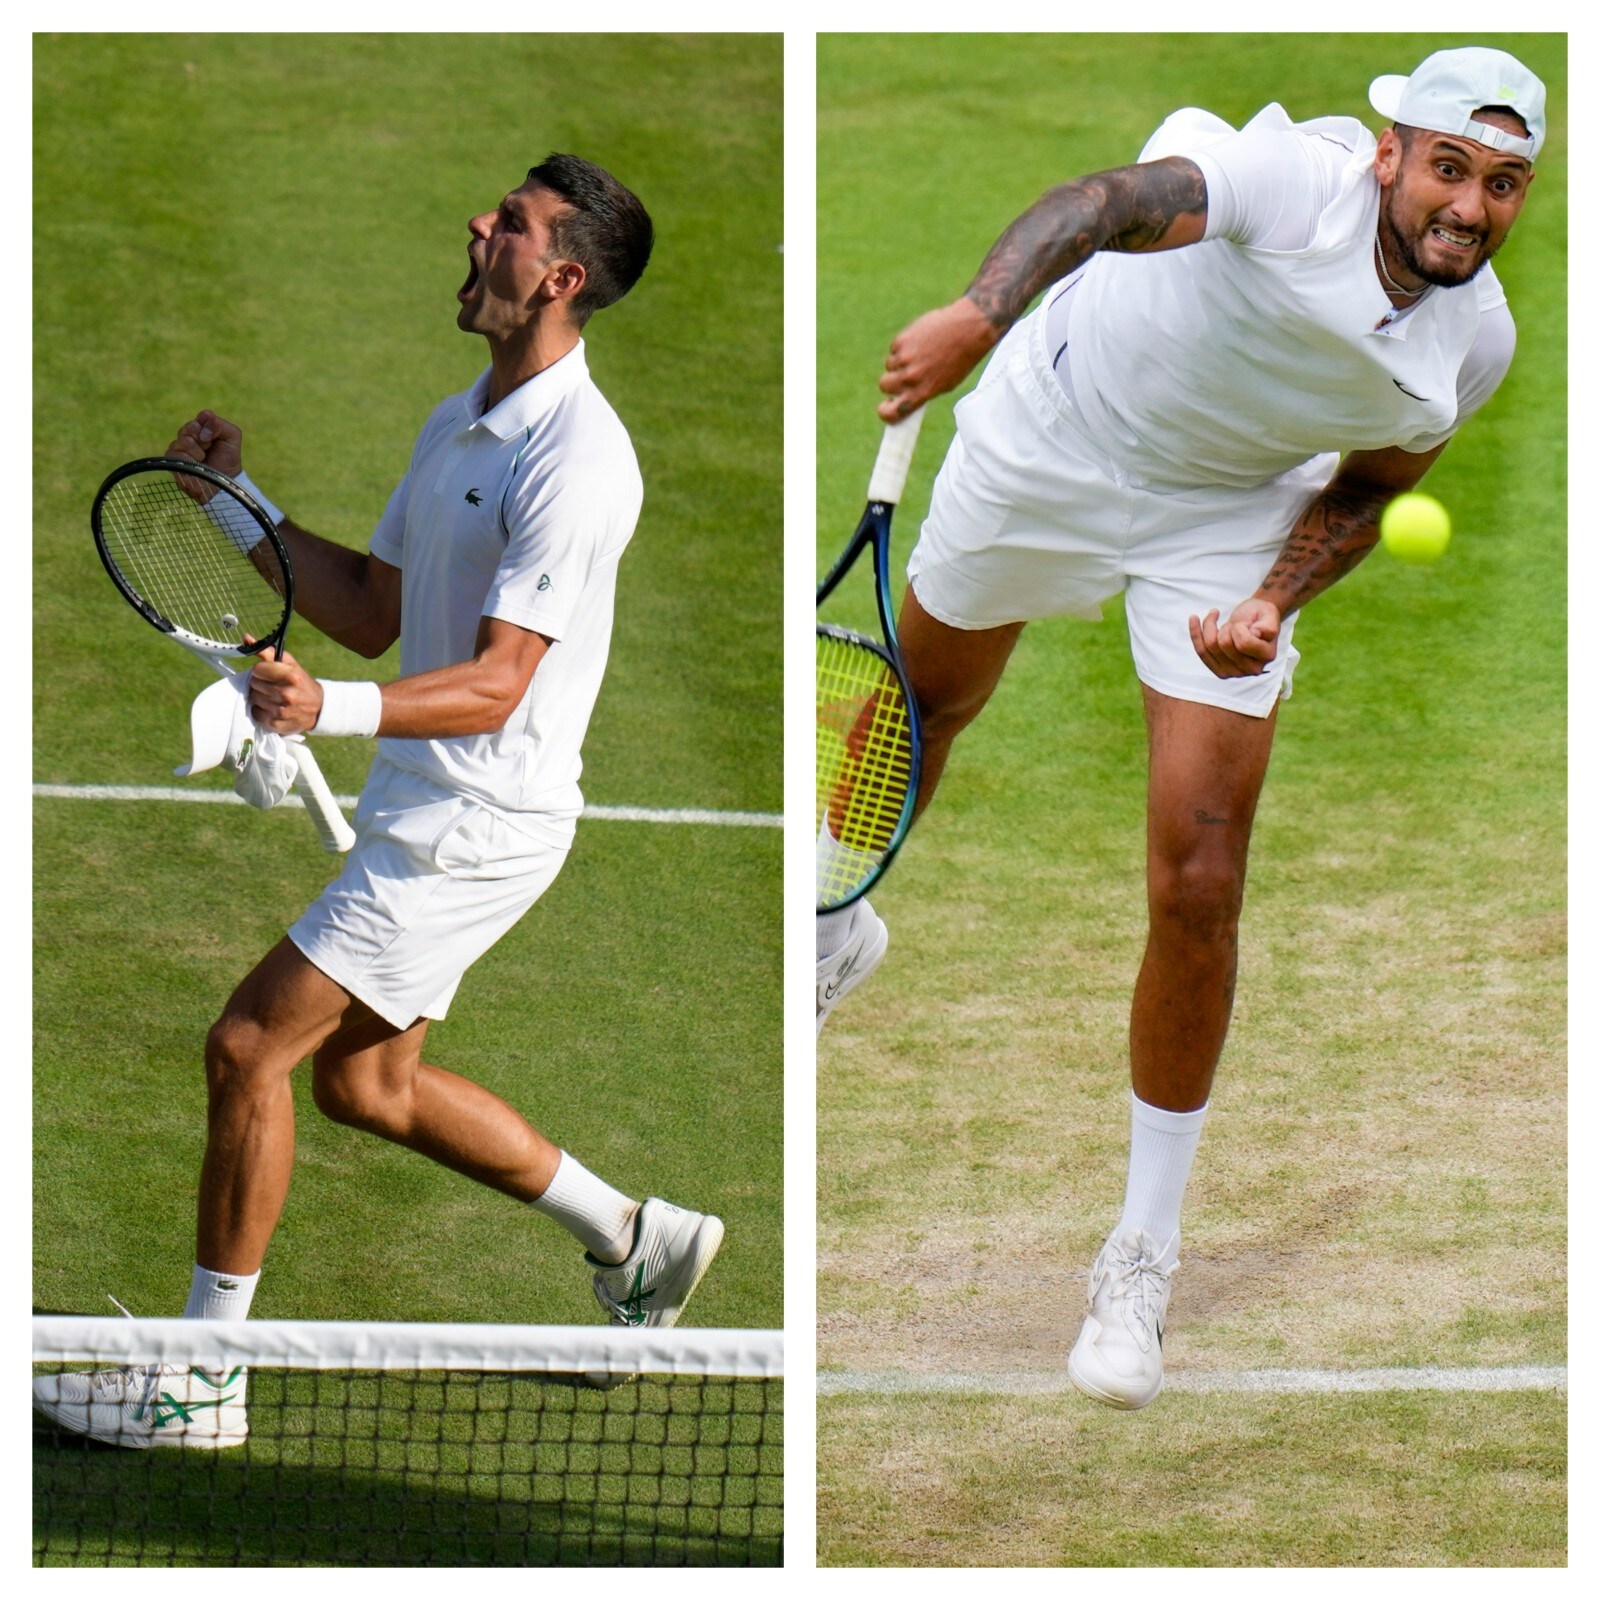 Wimbledon 2022 Novak Djokovic, Nick Kyrgios Set up Dinner Date After Title Clash With Winner Paying